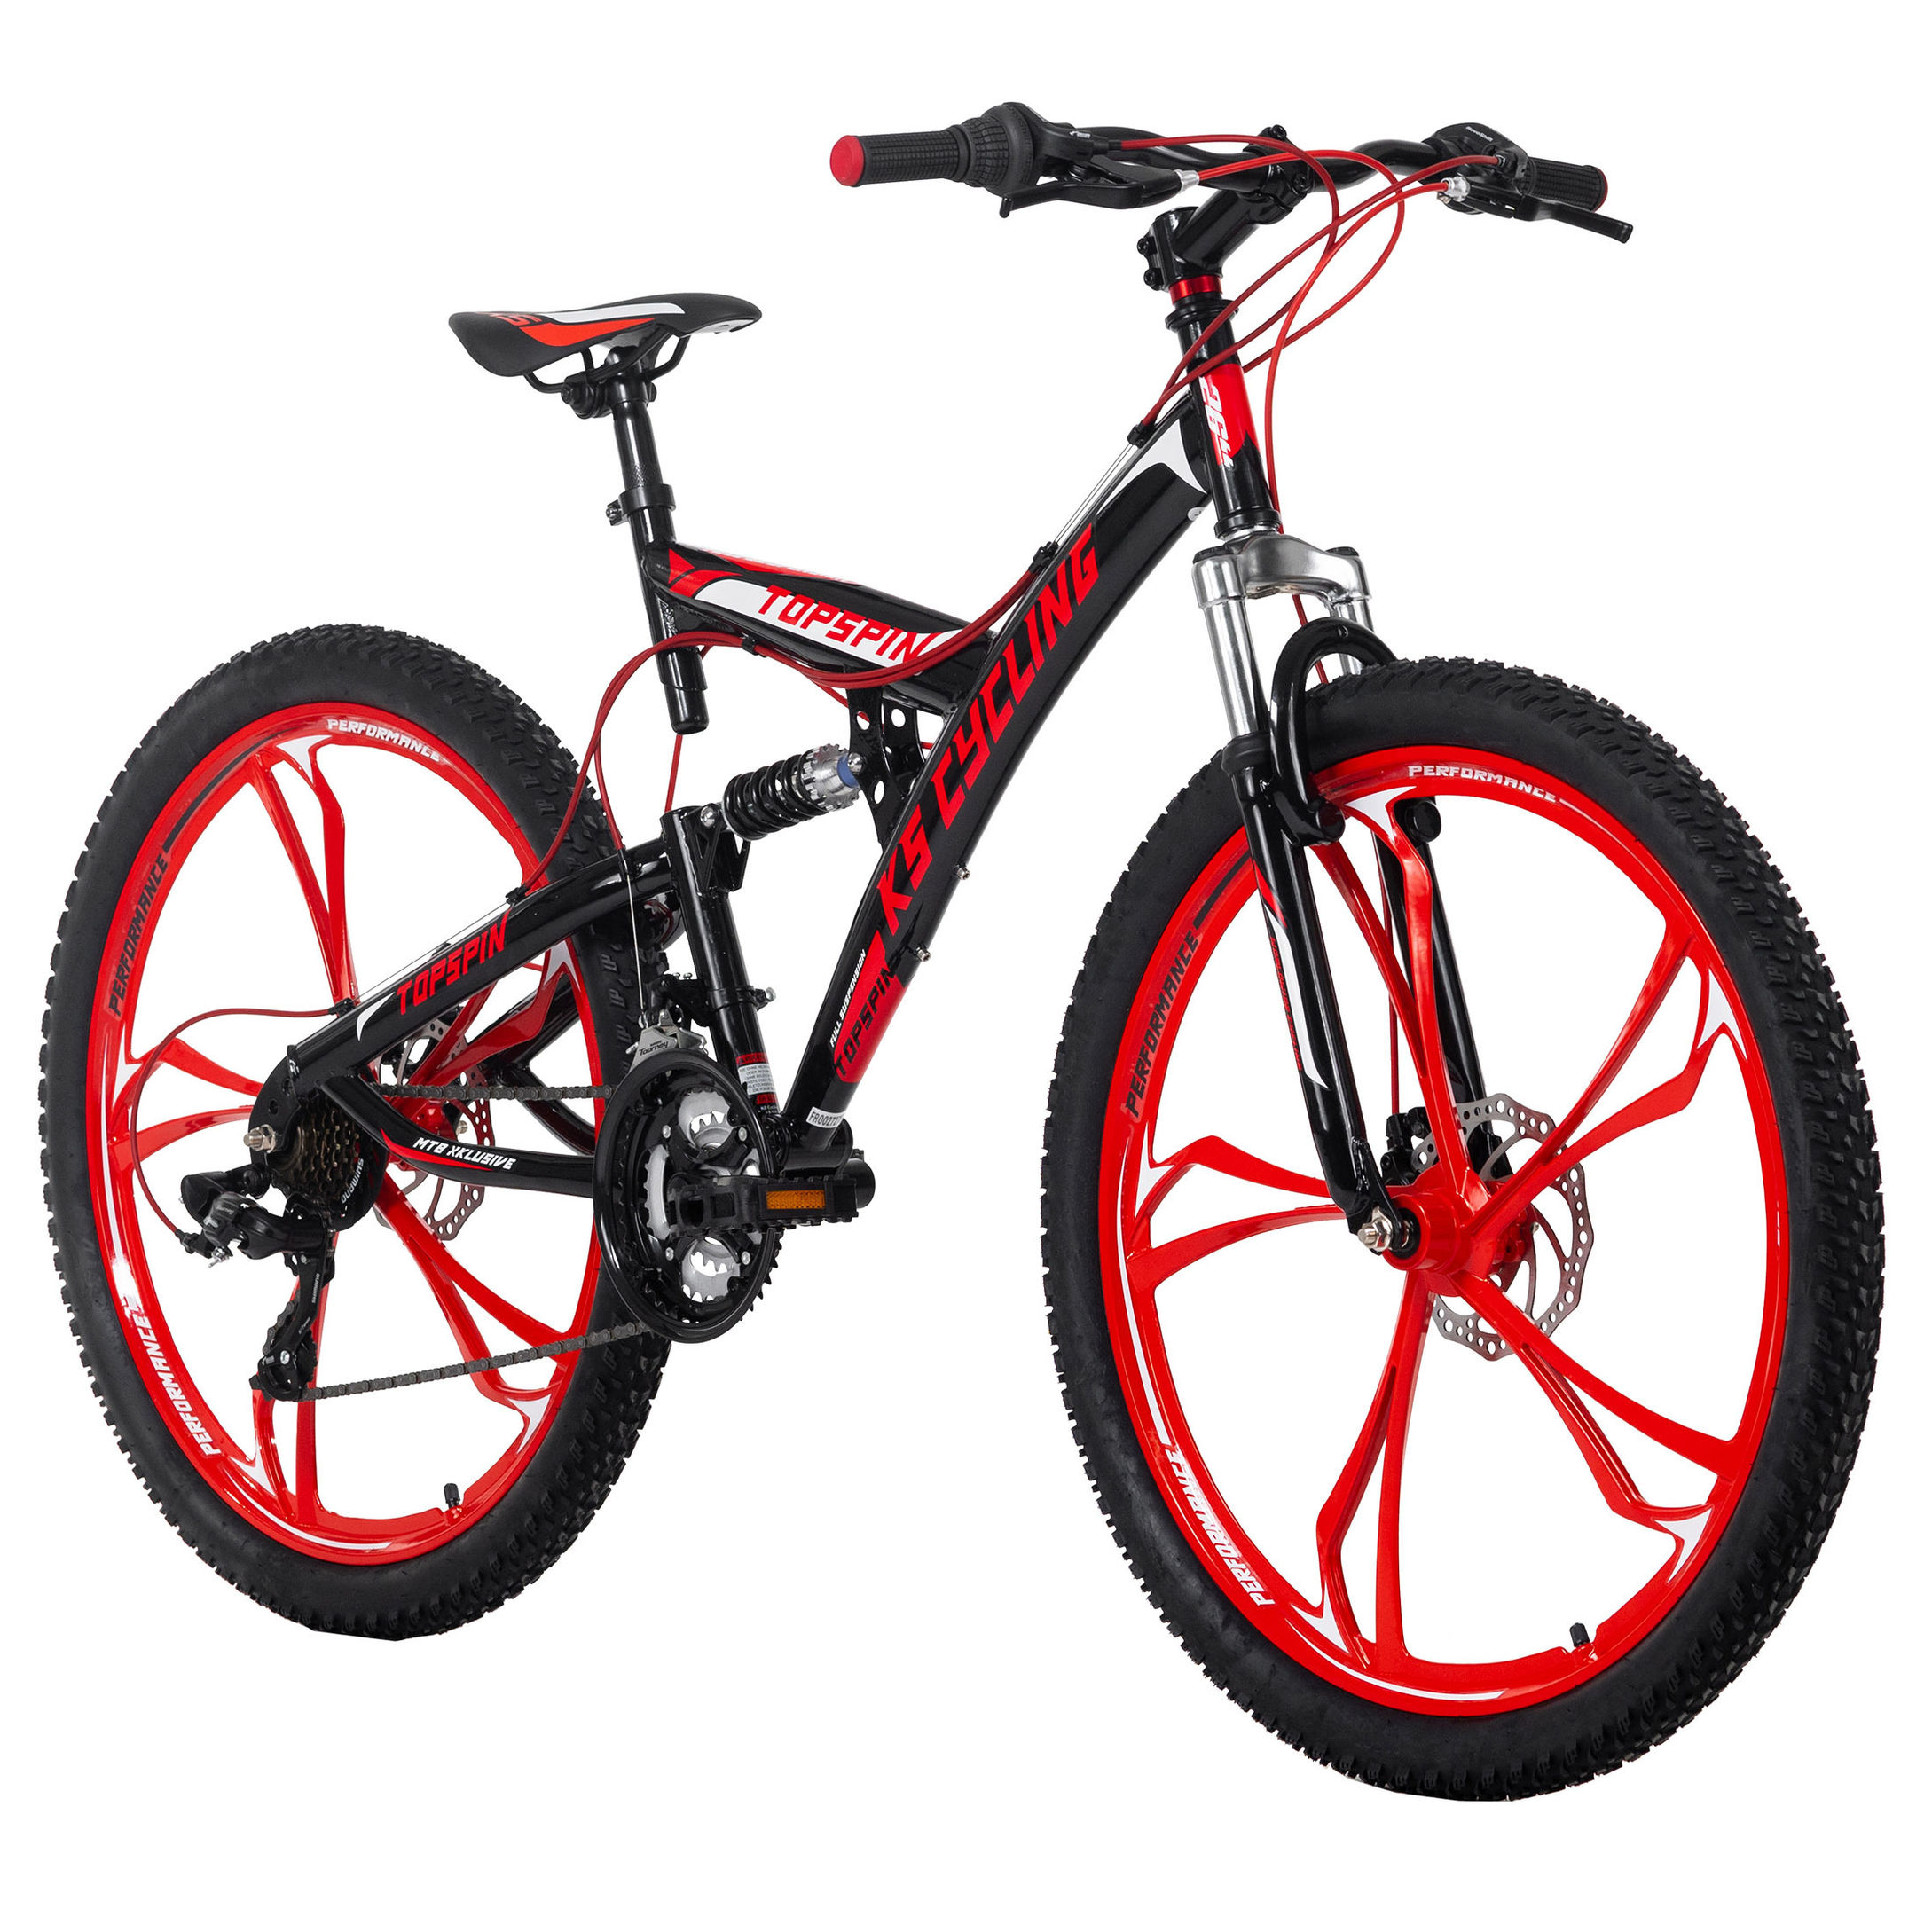 KS Cycling Mountainbike Fully 26 Zoll Topspin schwarz-rot Größe: 46 cm  online kaufen - Orbisana